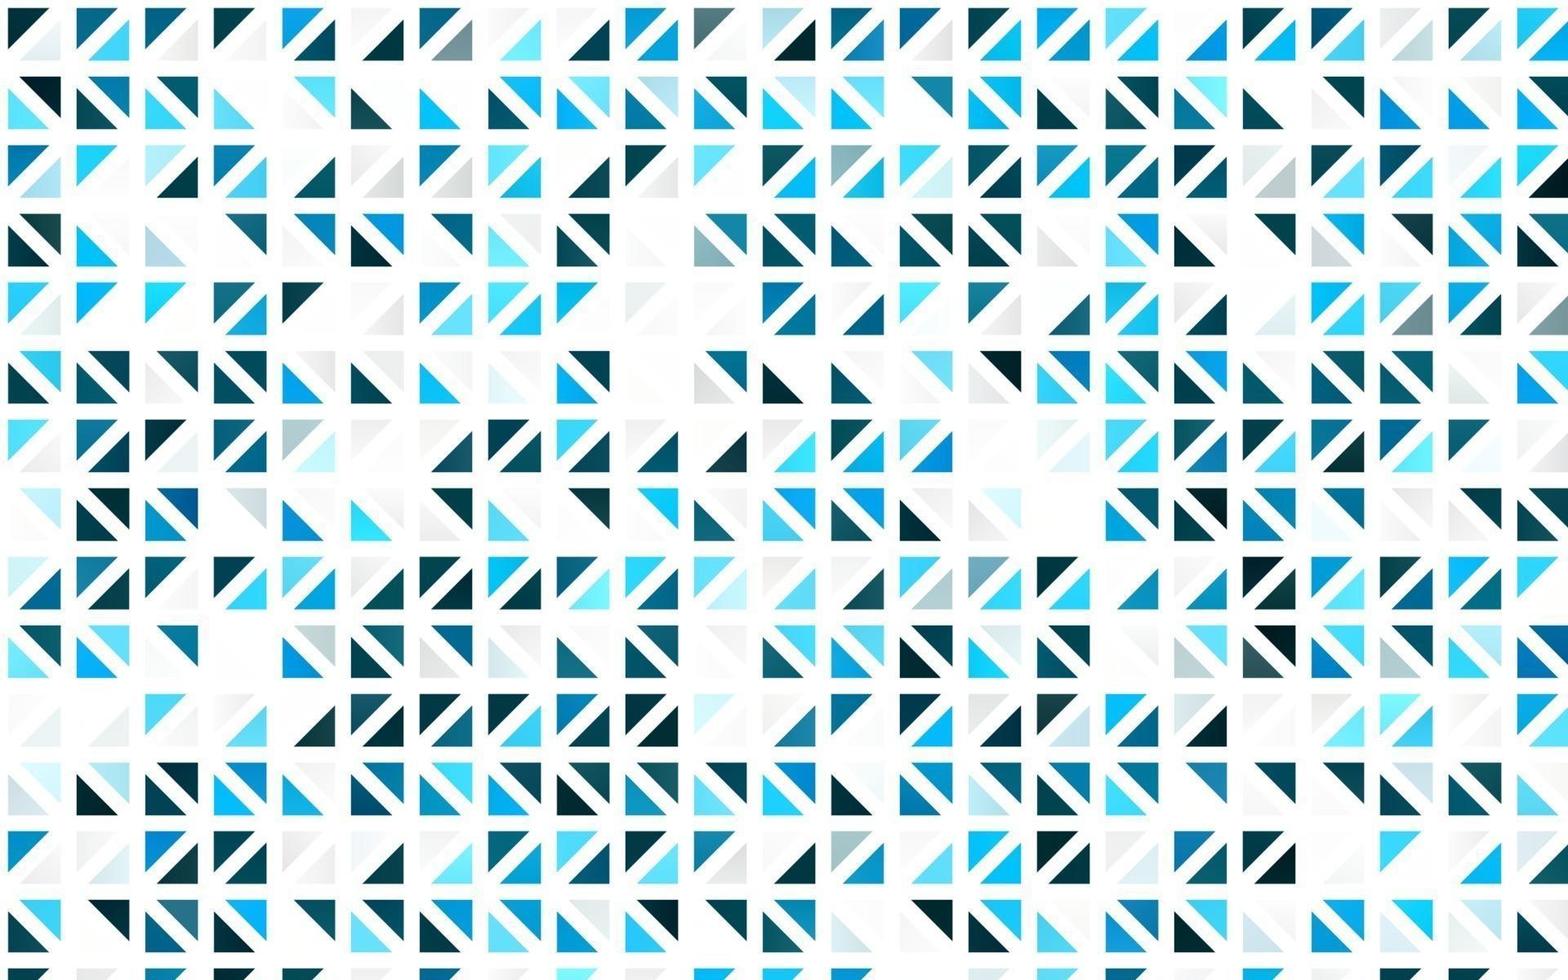 cubierta transparente de vector azul claro en estilo poligonal.